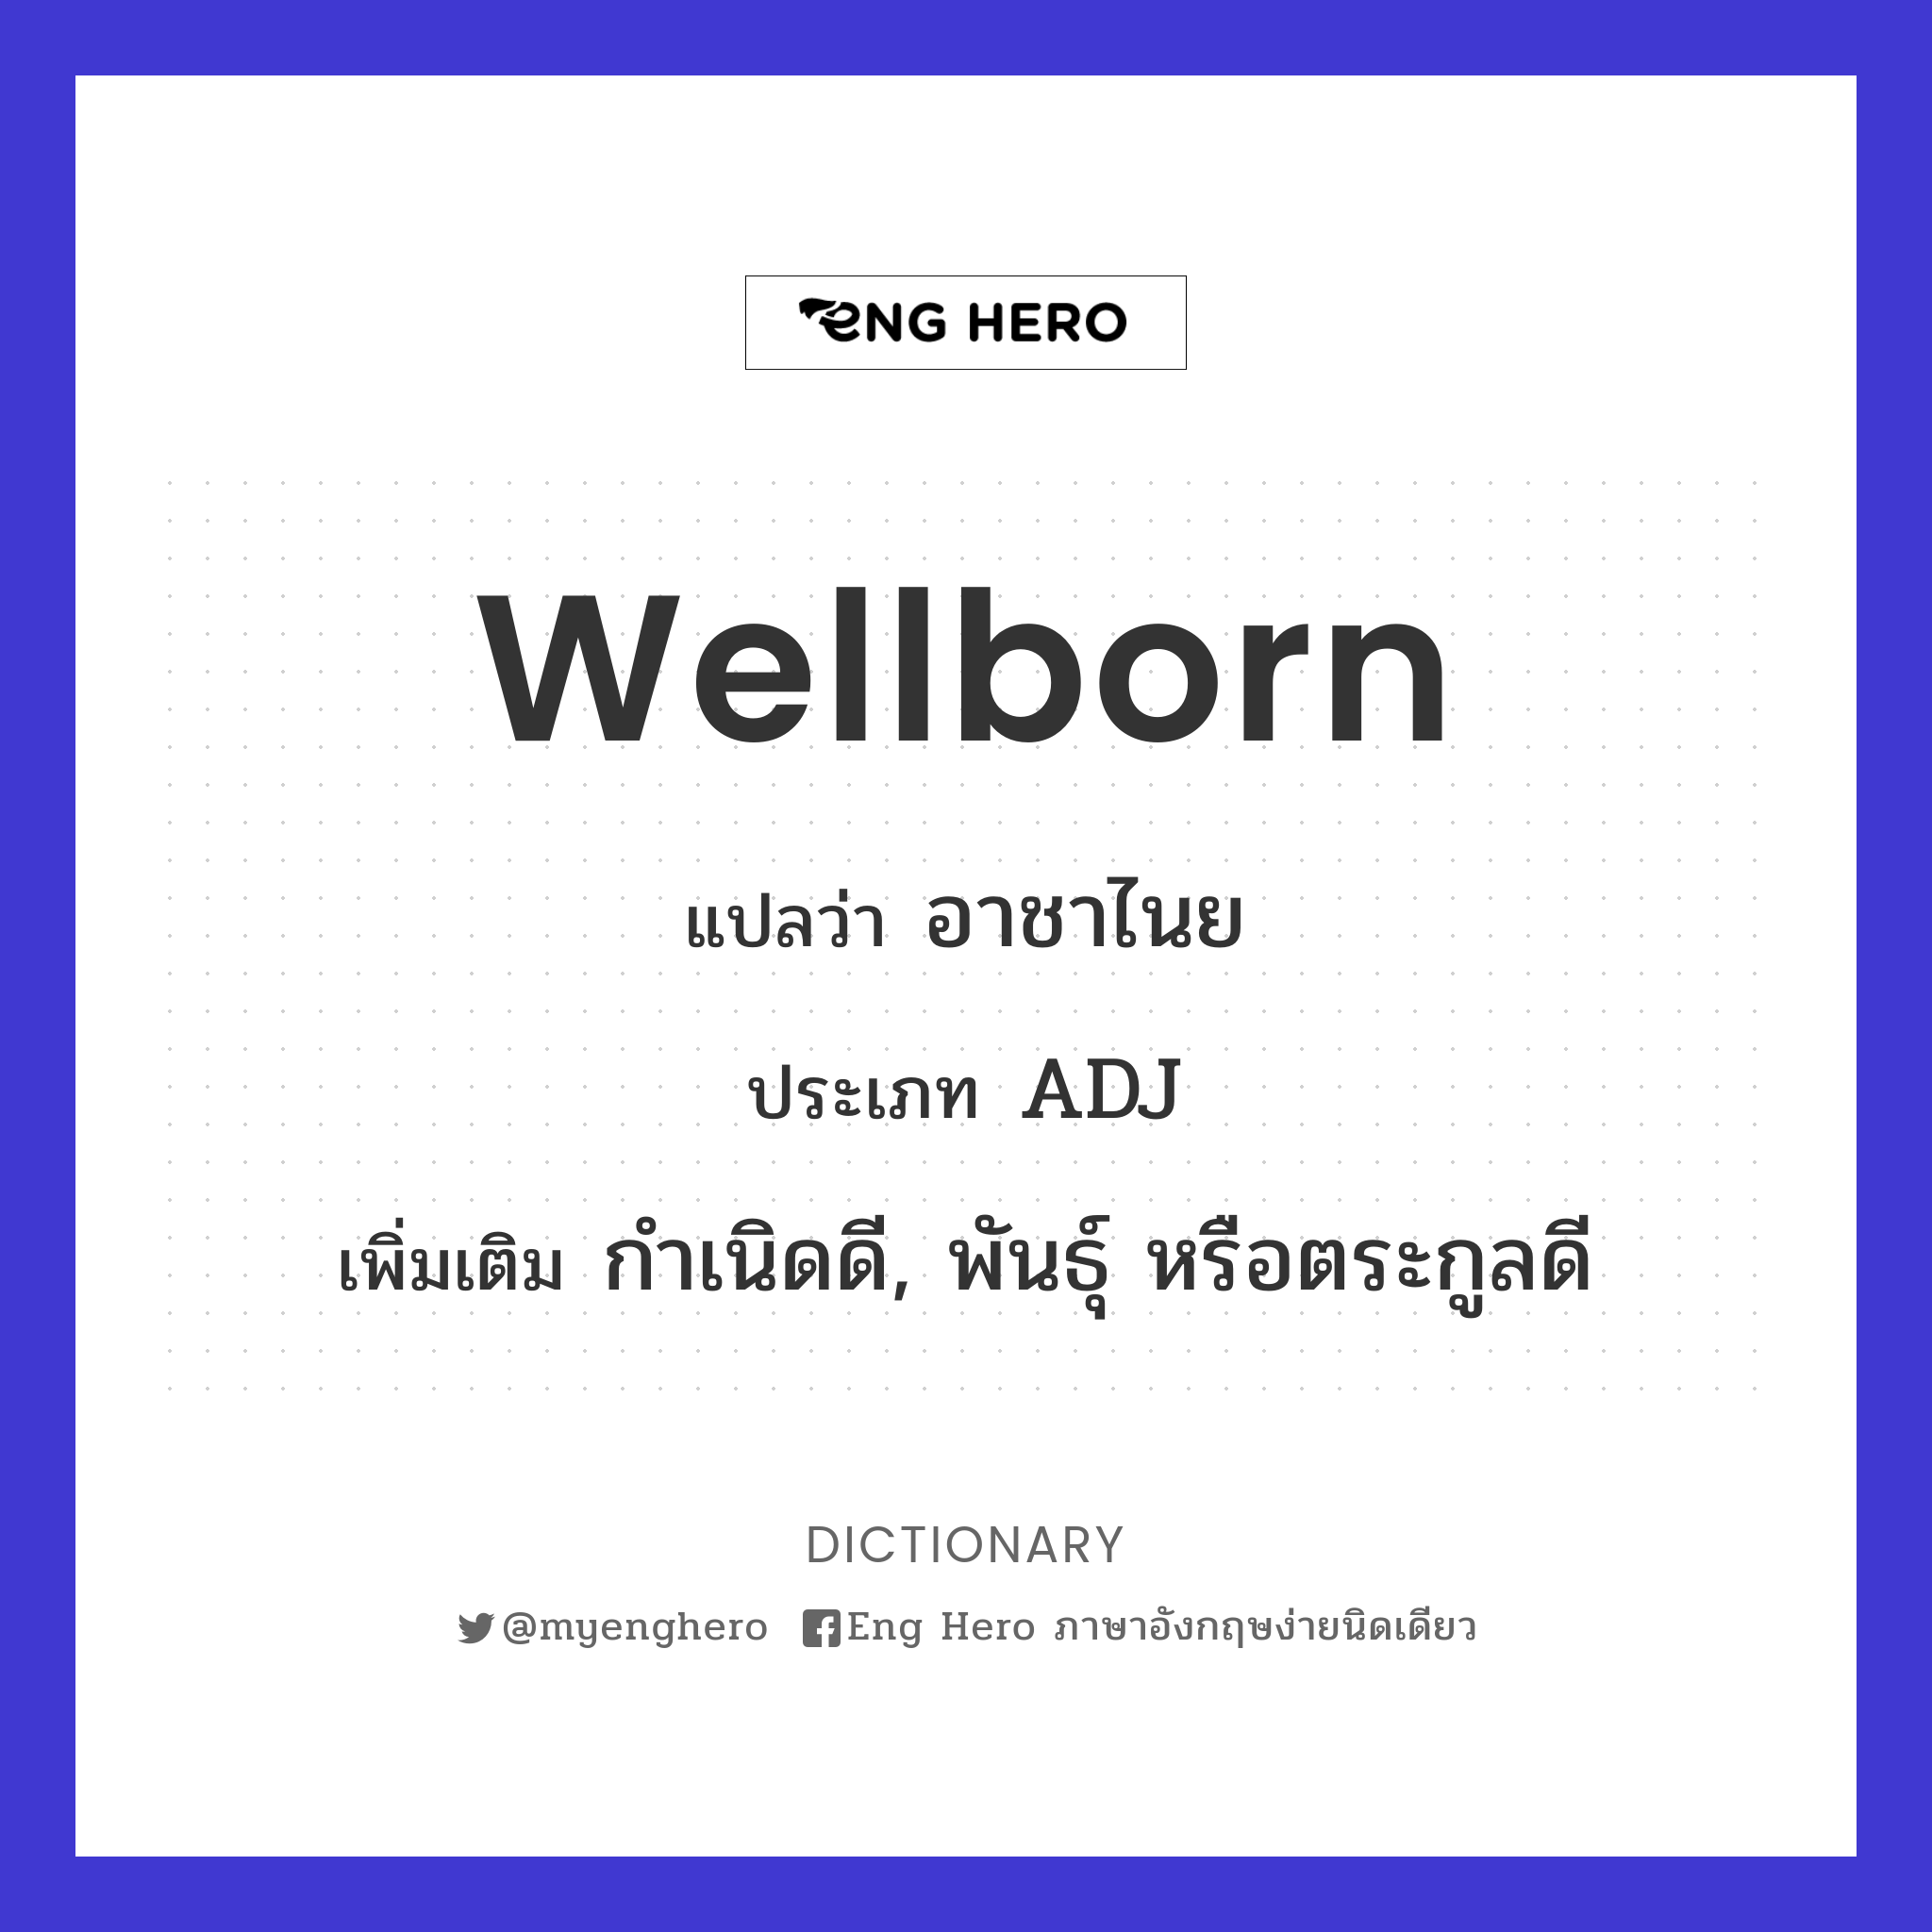 wellborn